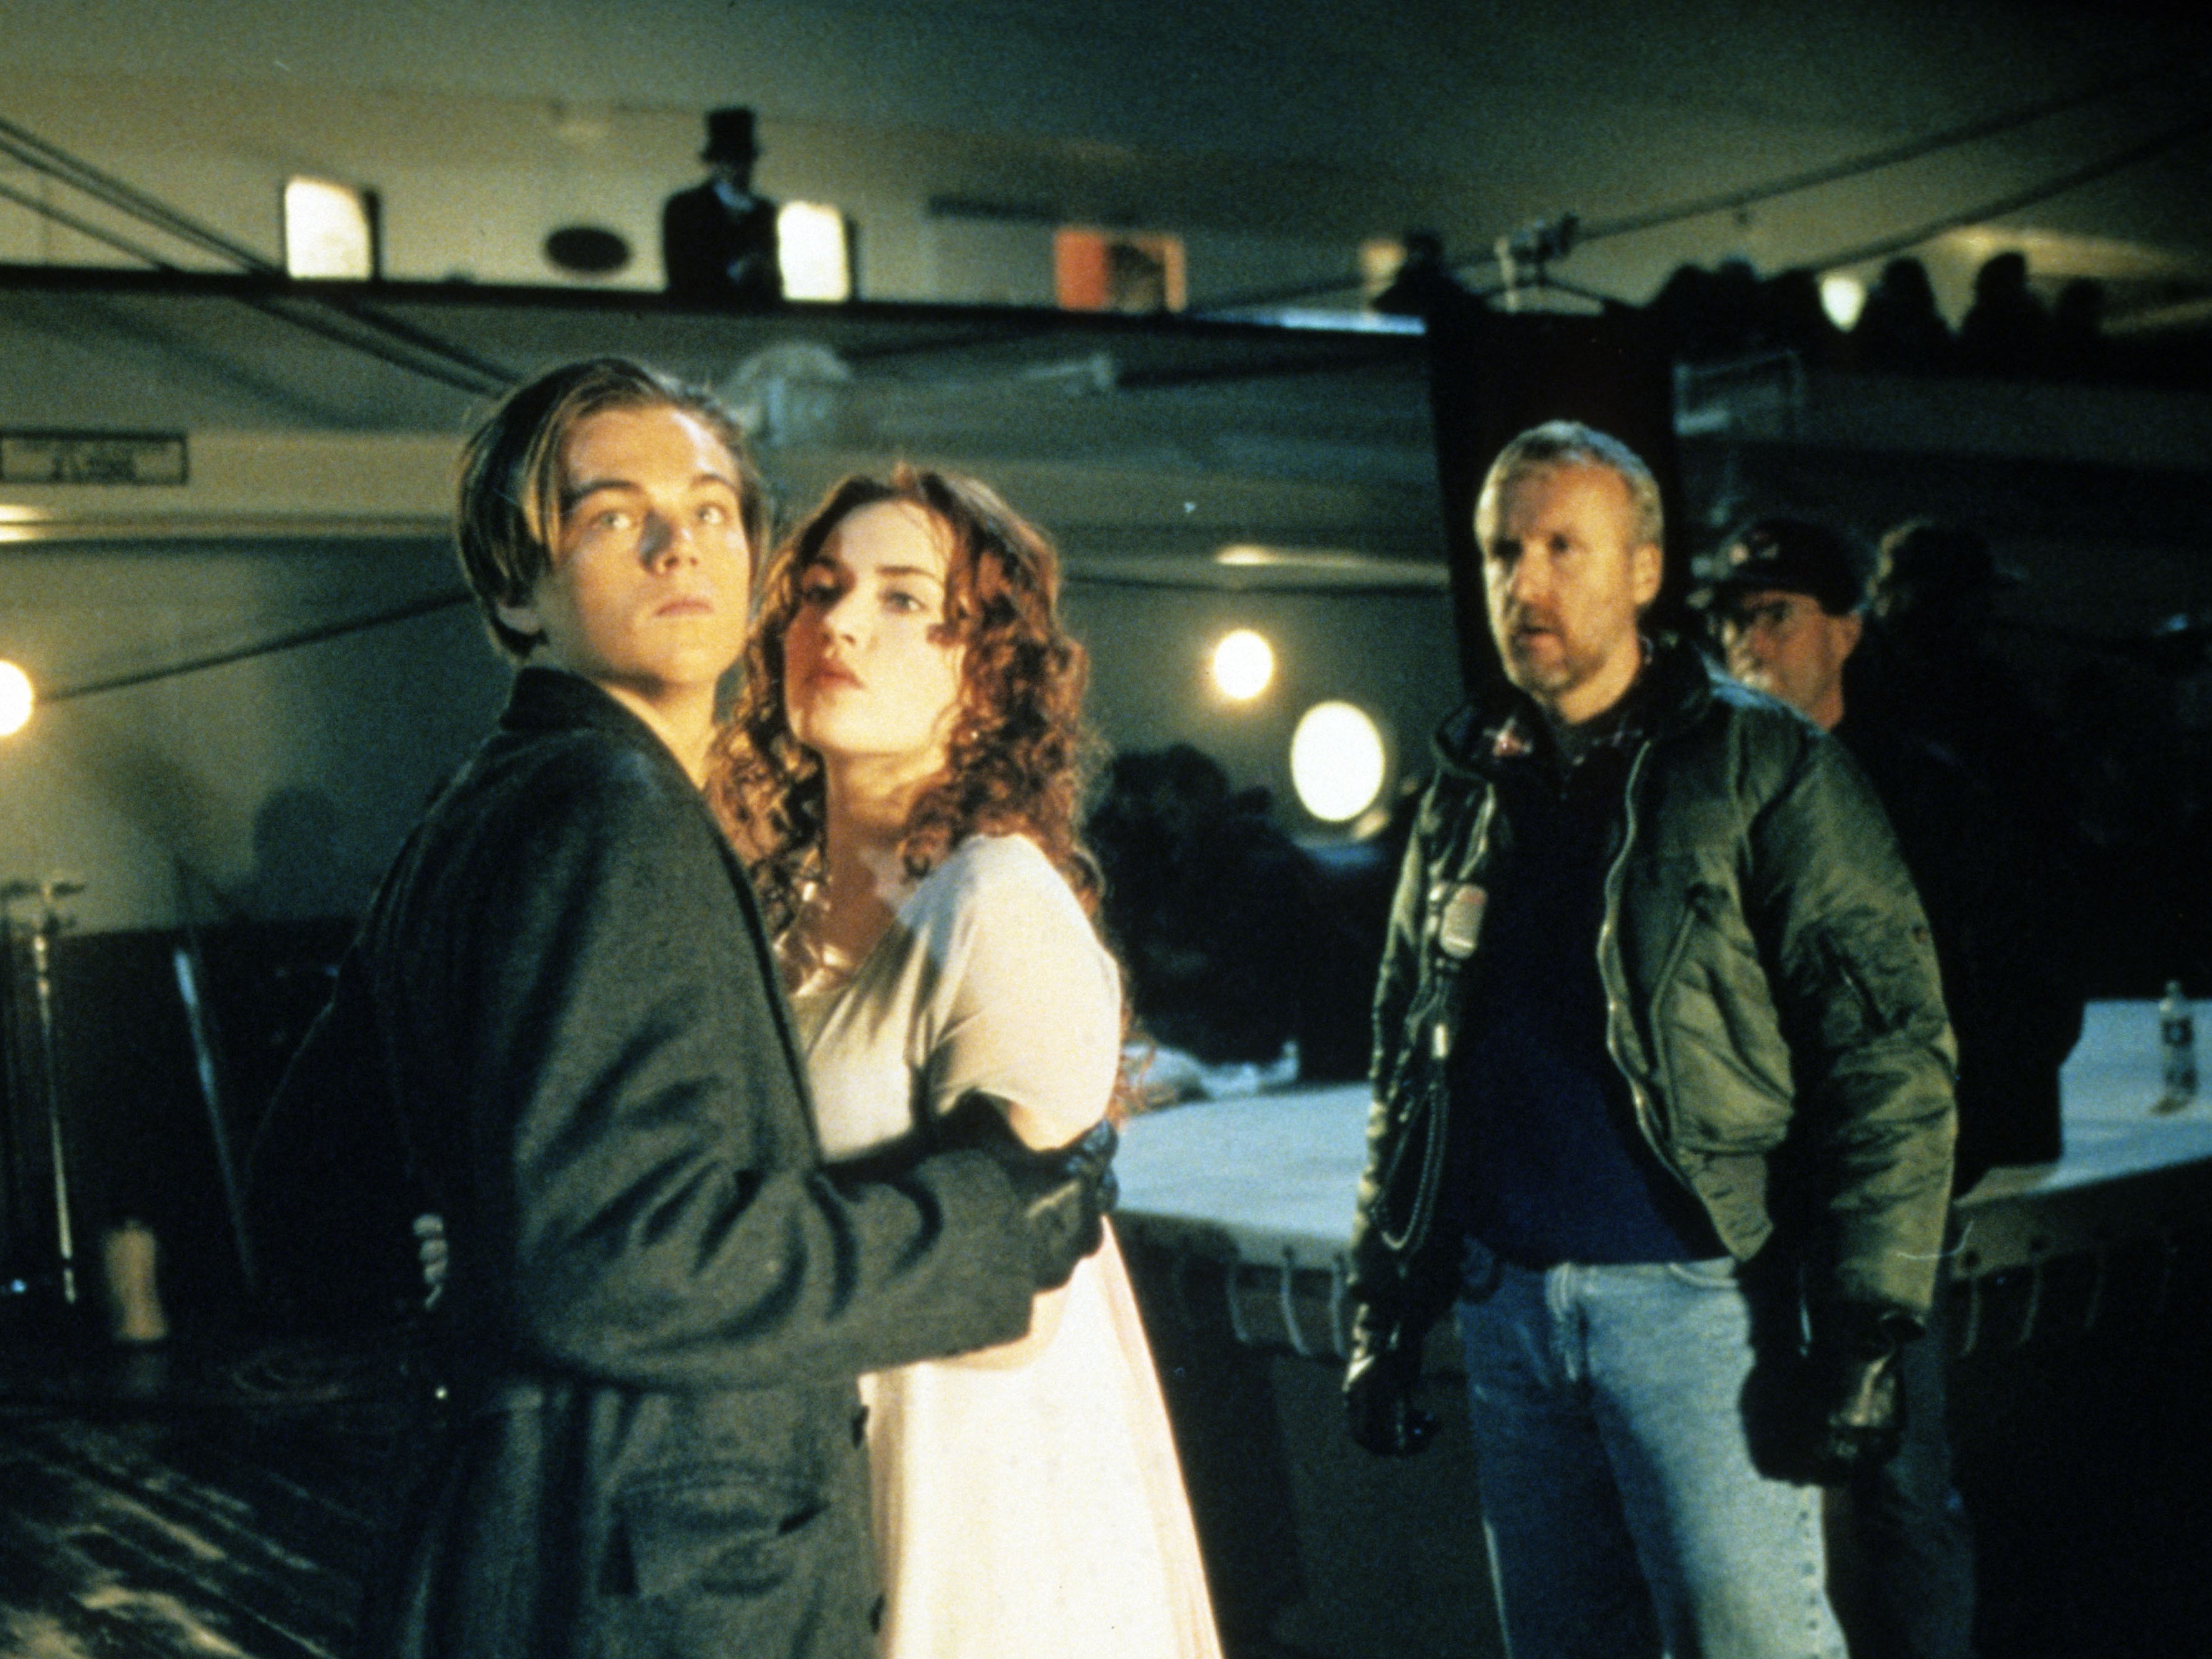 James Cameron directing Leonardo DiCaprio and Kate Winslet in ‘Titanic’